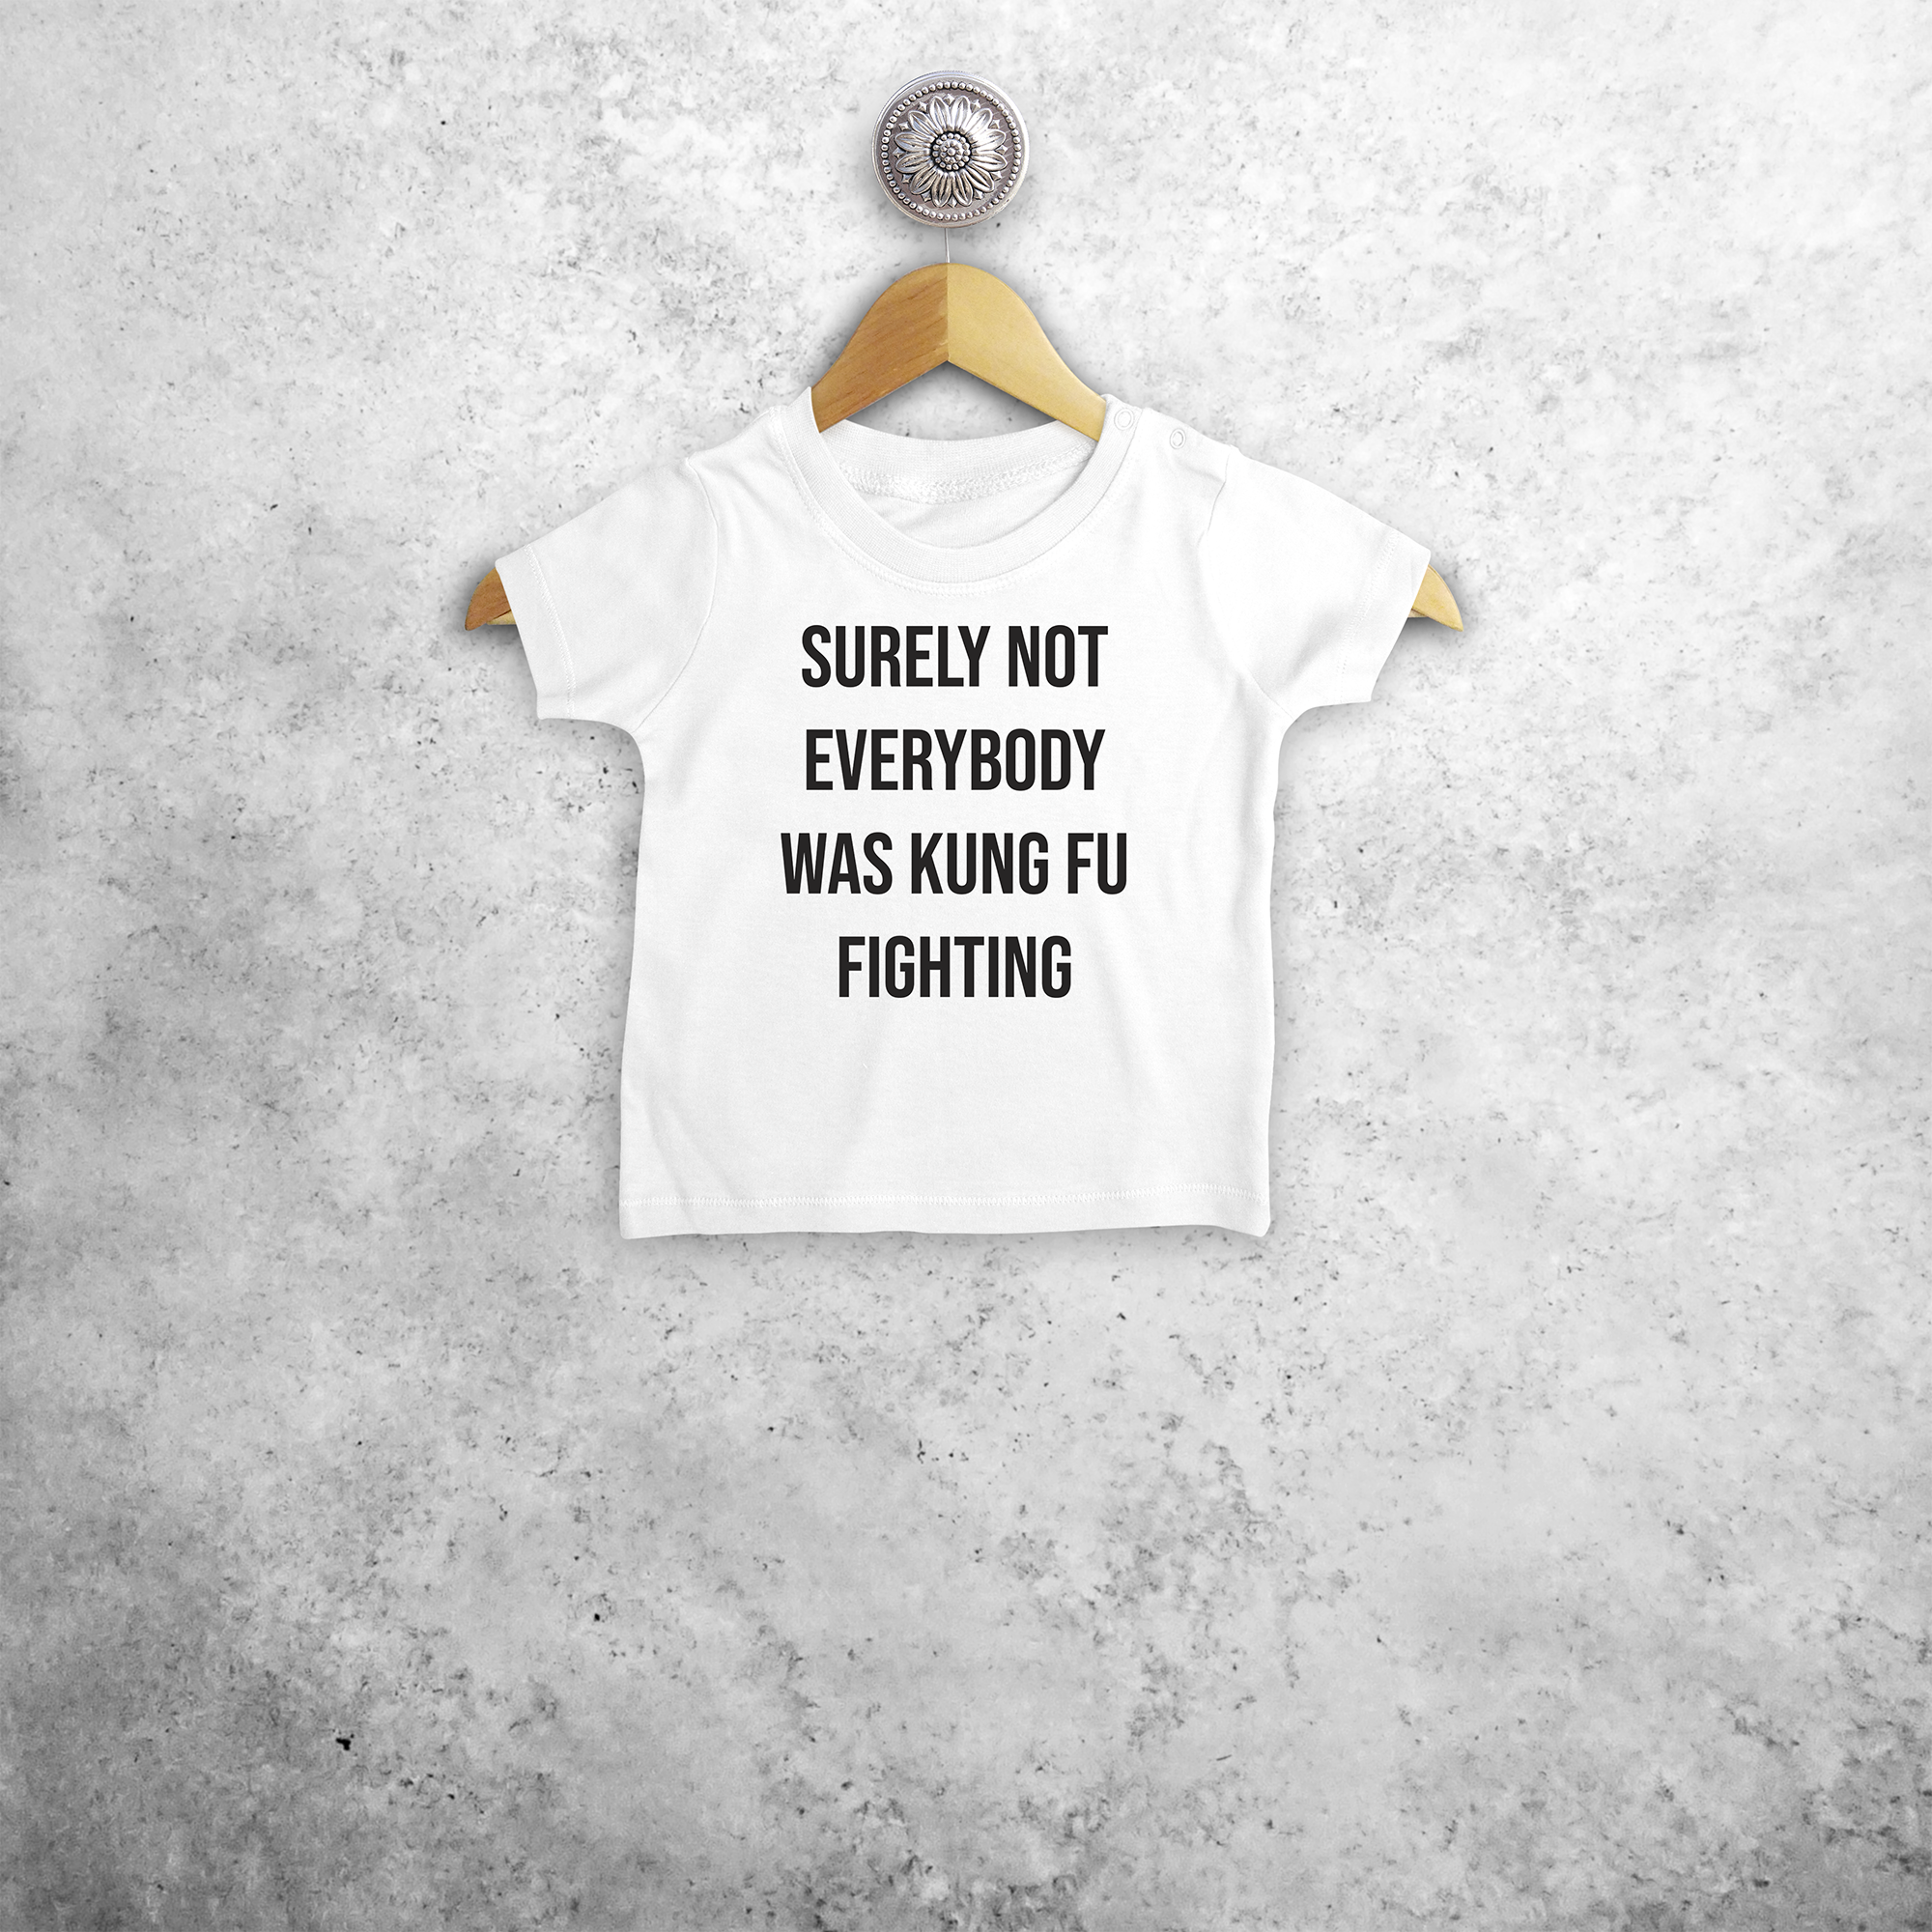 'Surely not everybody was fung fu fighting' baby shirt met korte mouwen